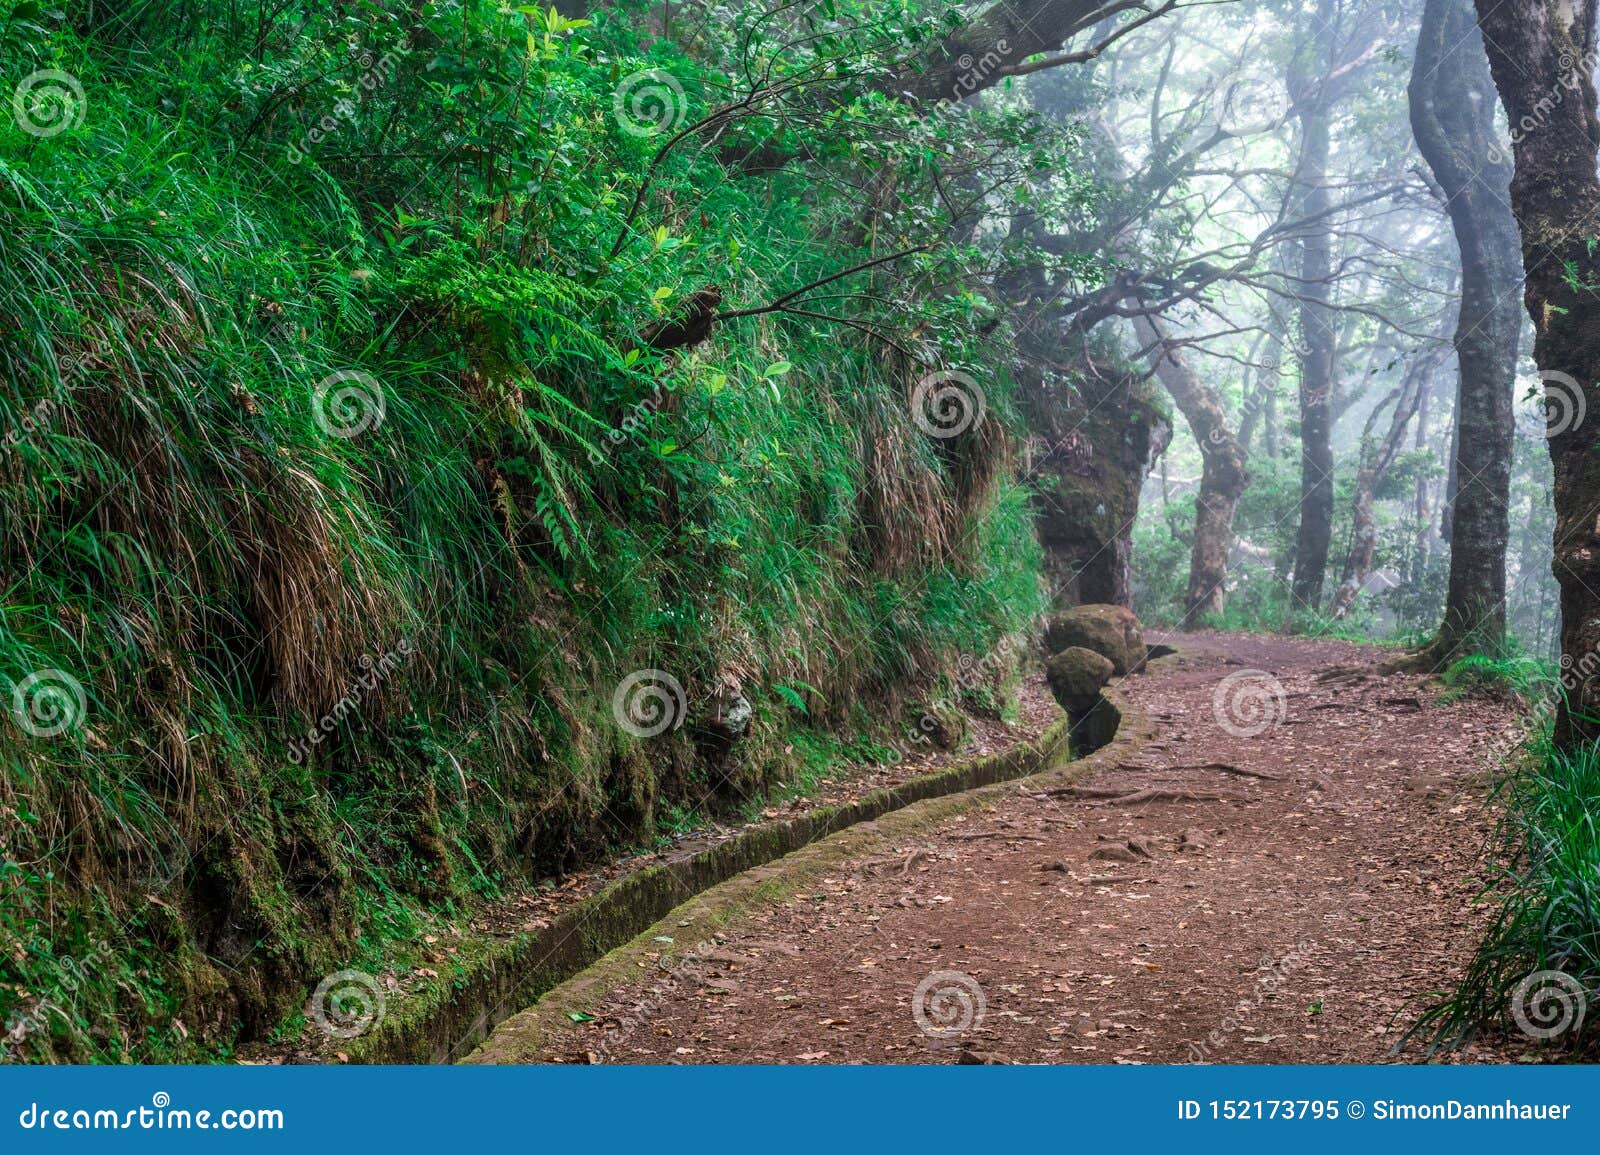 levada dos balcoes in ribeiro frio, hiking on trekking trail vereda dos balcoes, forest ribeiro frio, madeira portugal